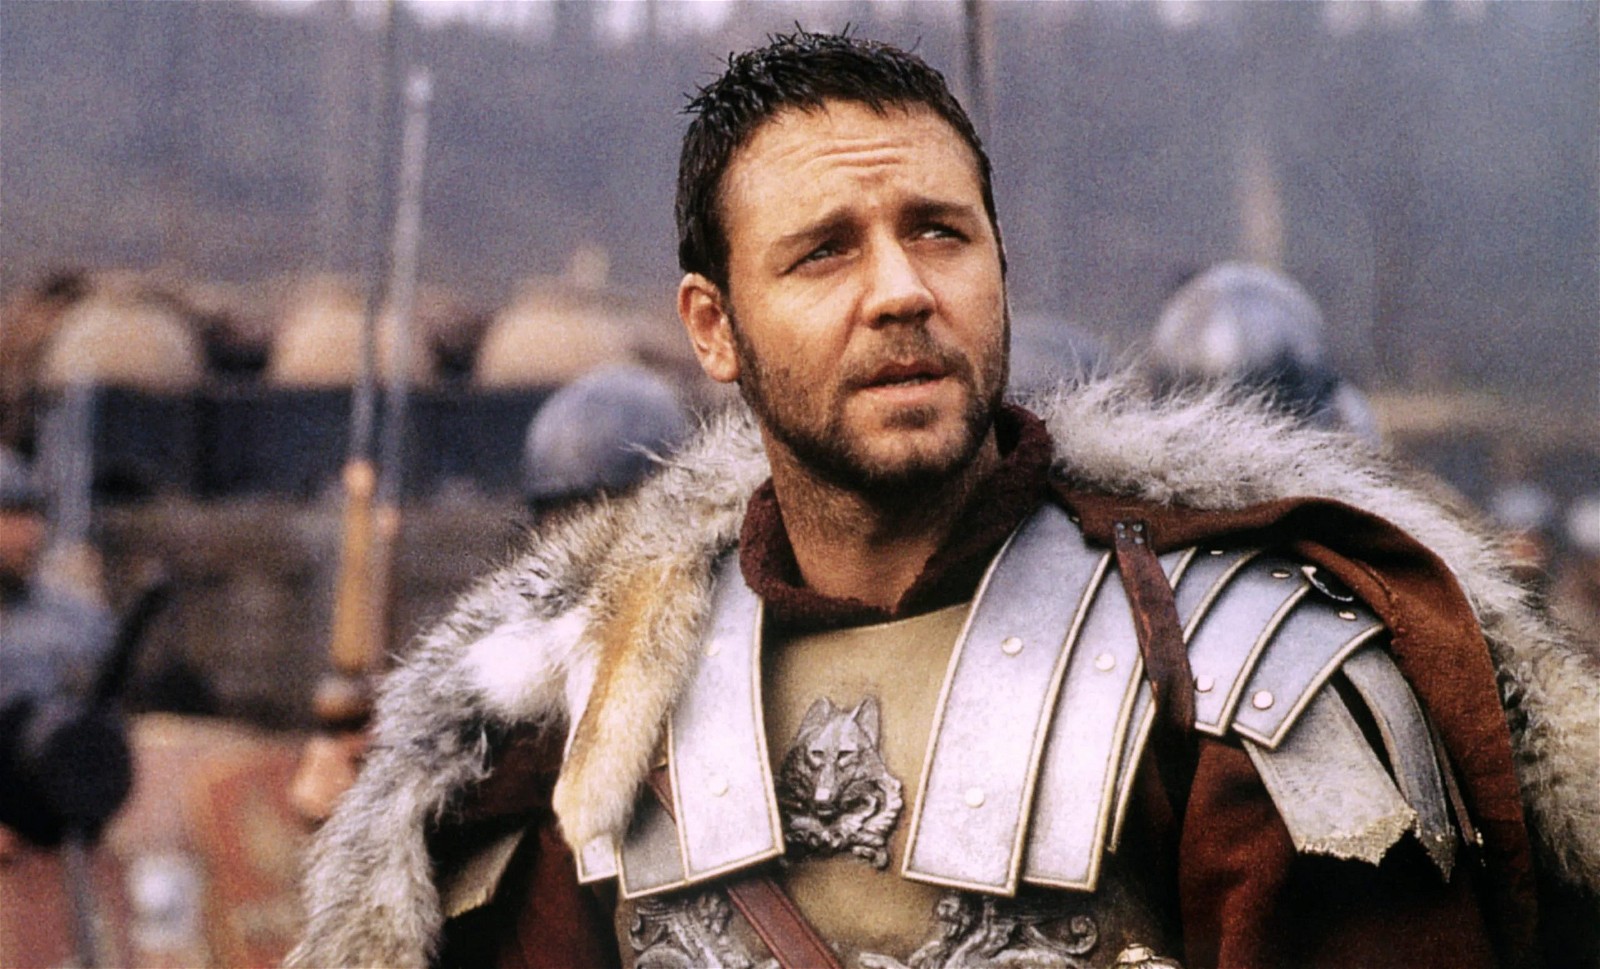 Russell Crowe as Maximus Decimus Meridius in Ridley Scott's Gladiator | DreamWorks Distribution